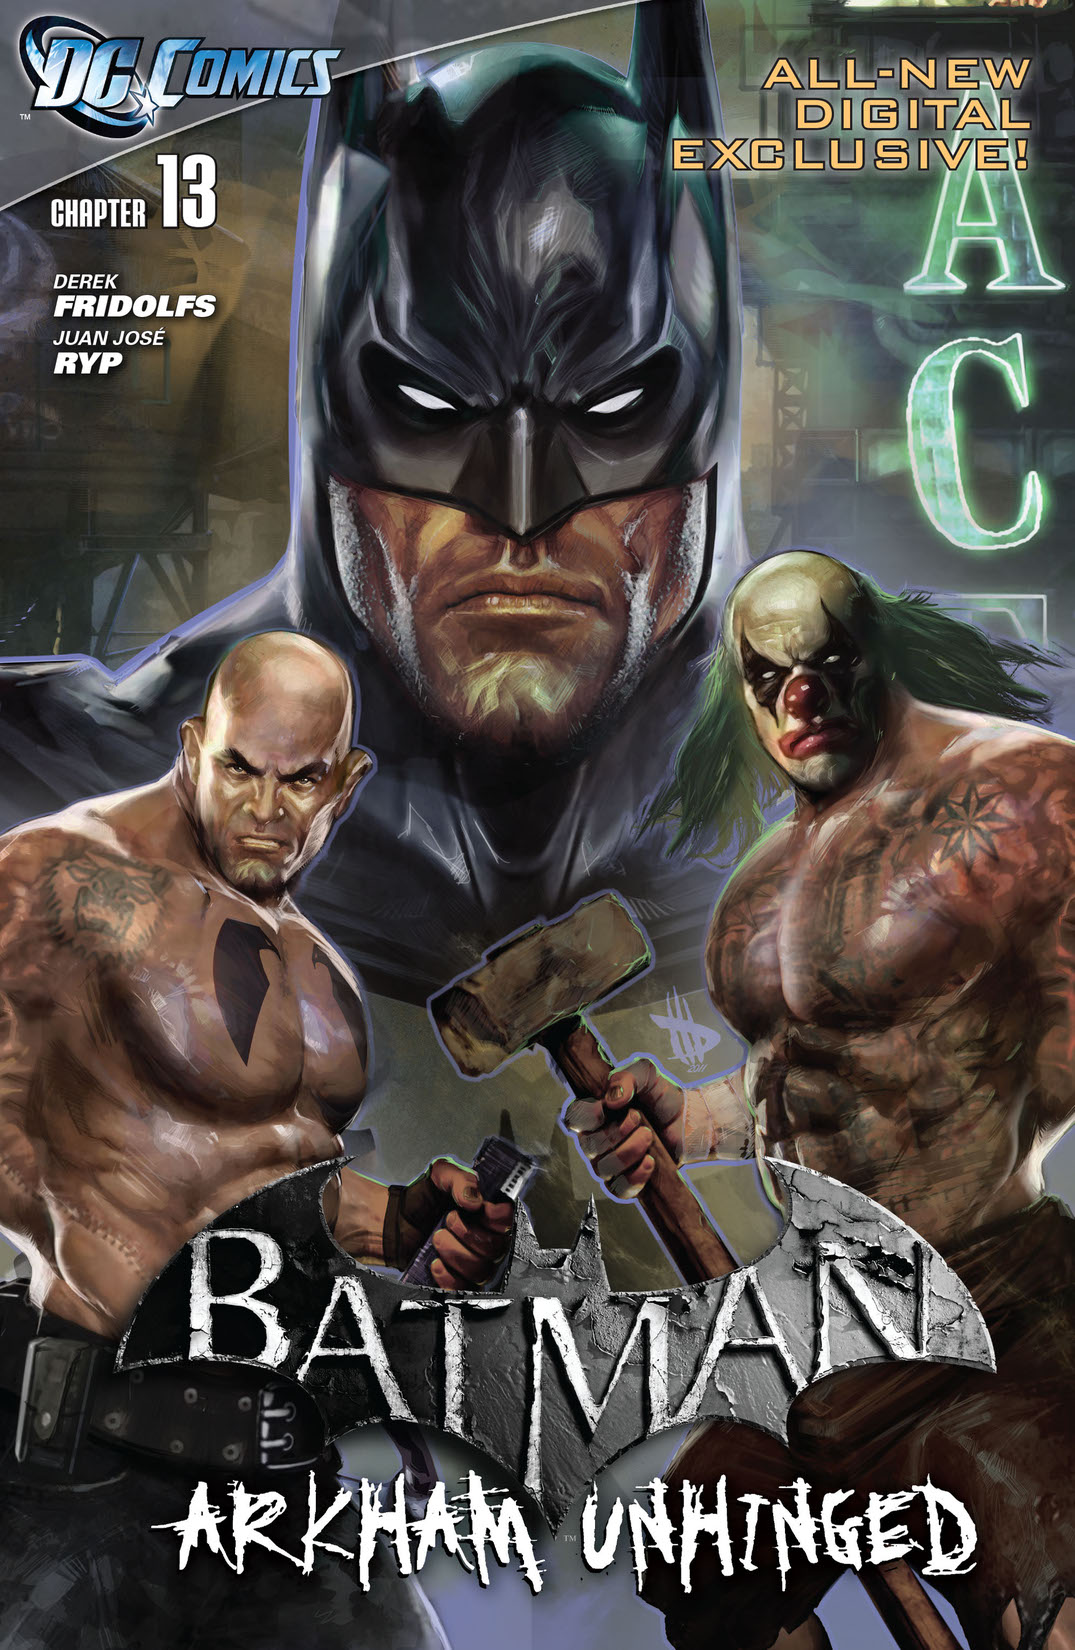 Batman: Arkham Unhinged #13 preview images